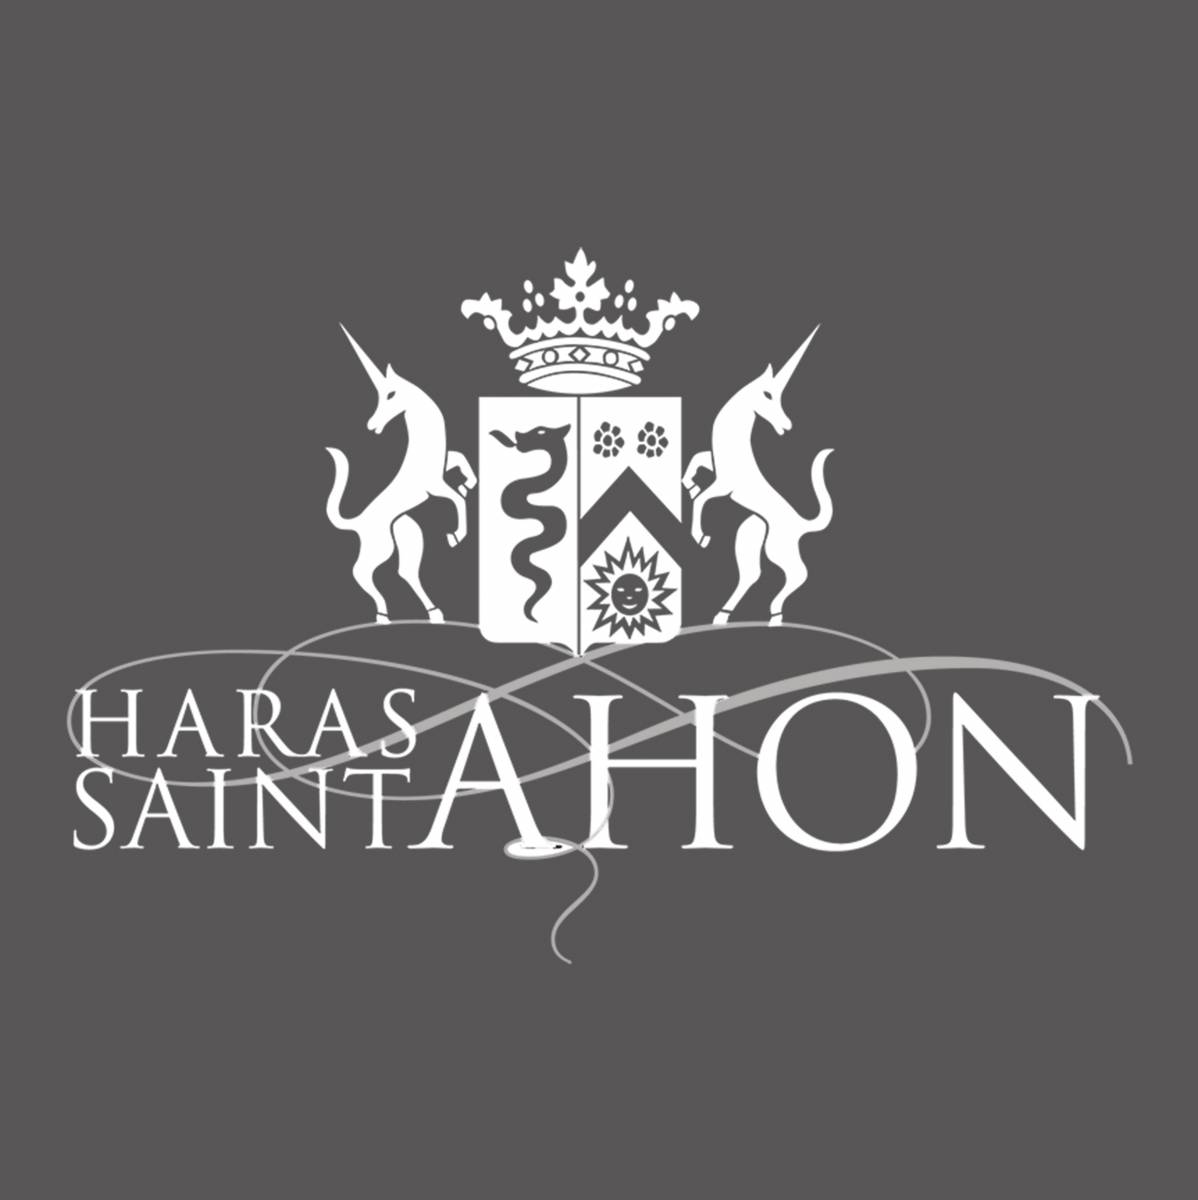 Haras Saint AHON